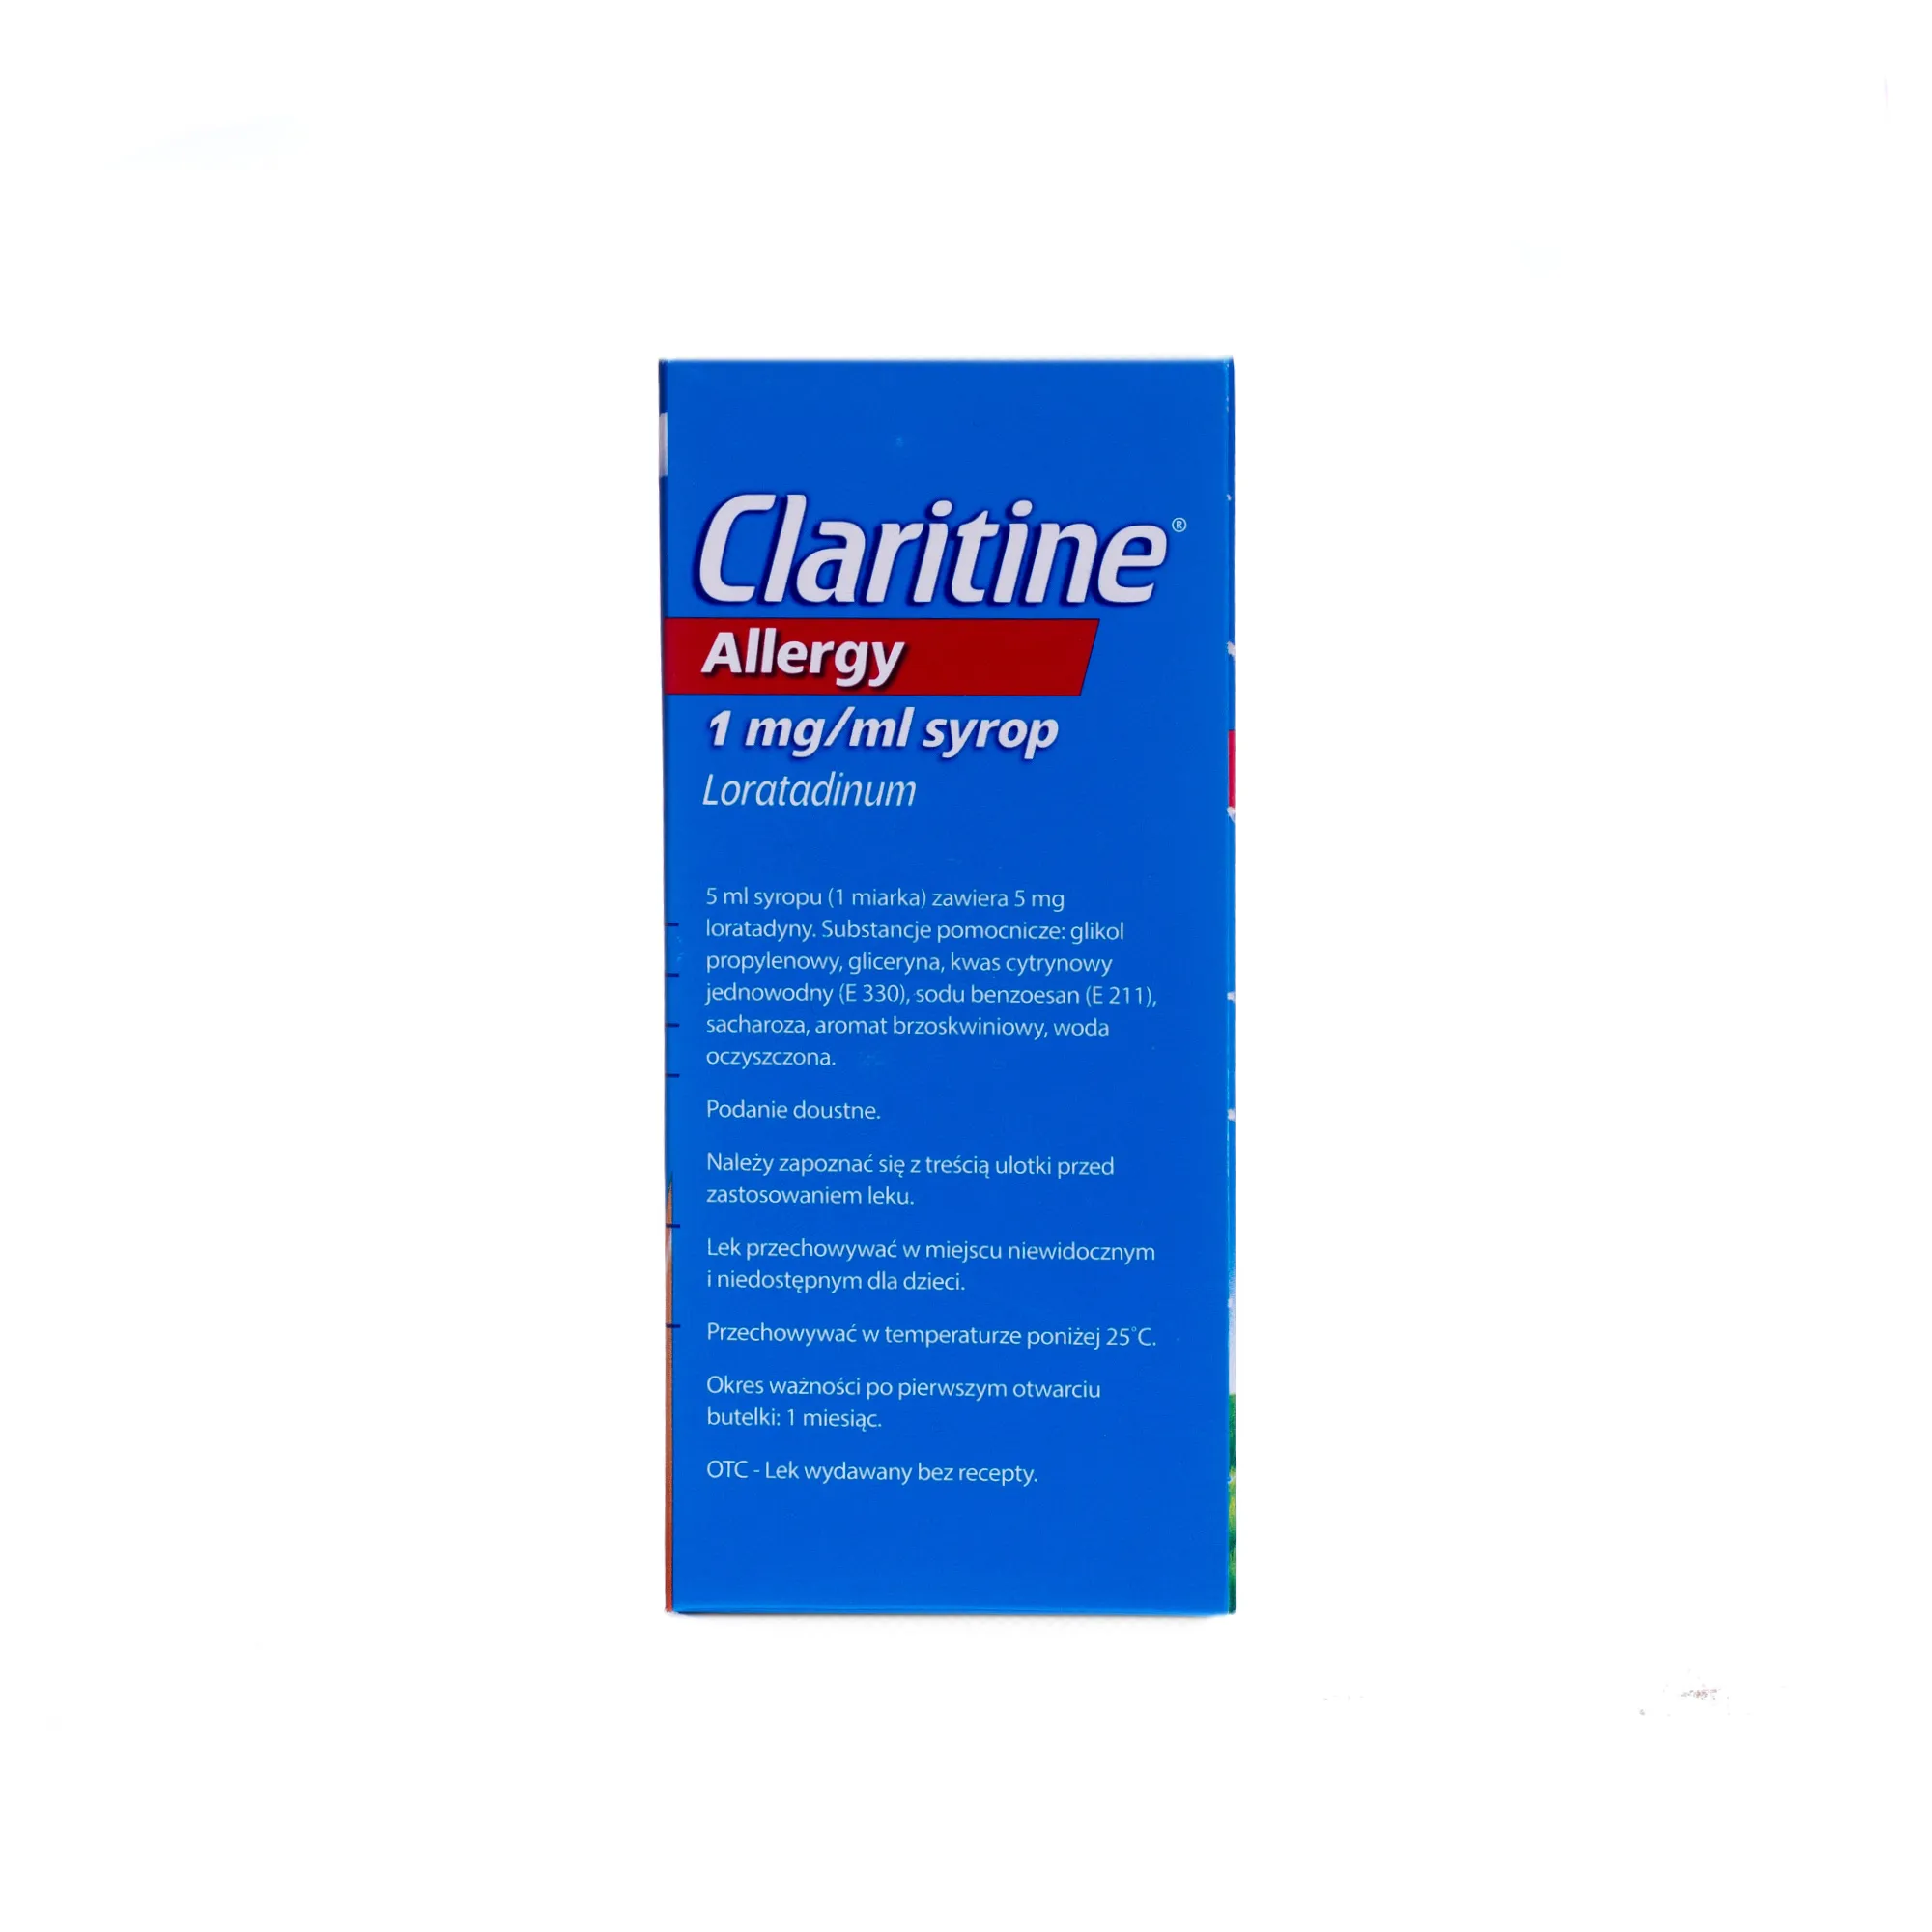 Claritine Allergy 1 mg/ml syrop, smak brzoskwiniowy, 60 ml 